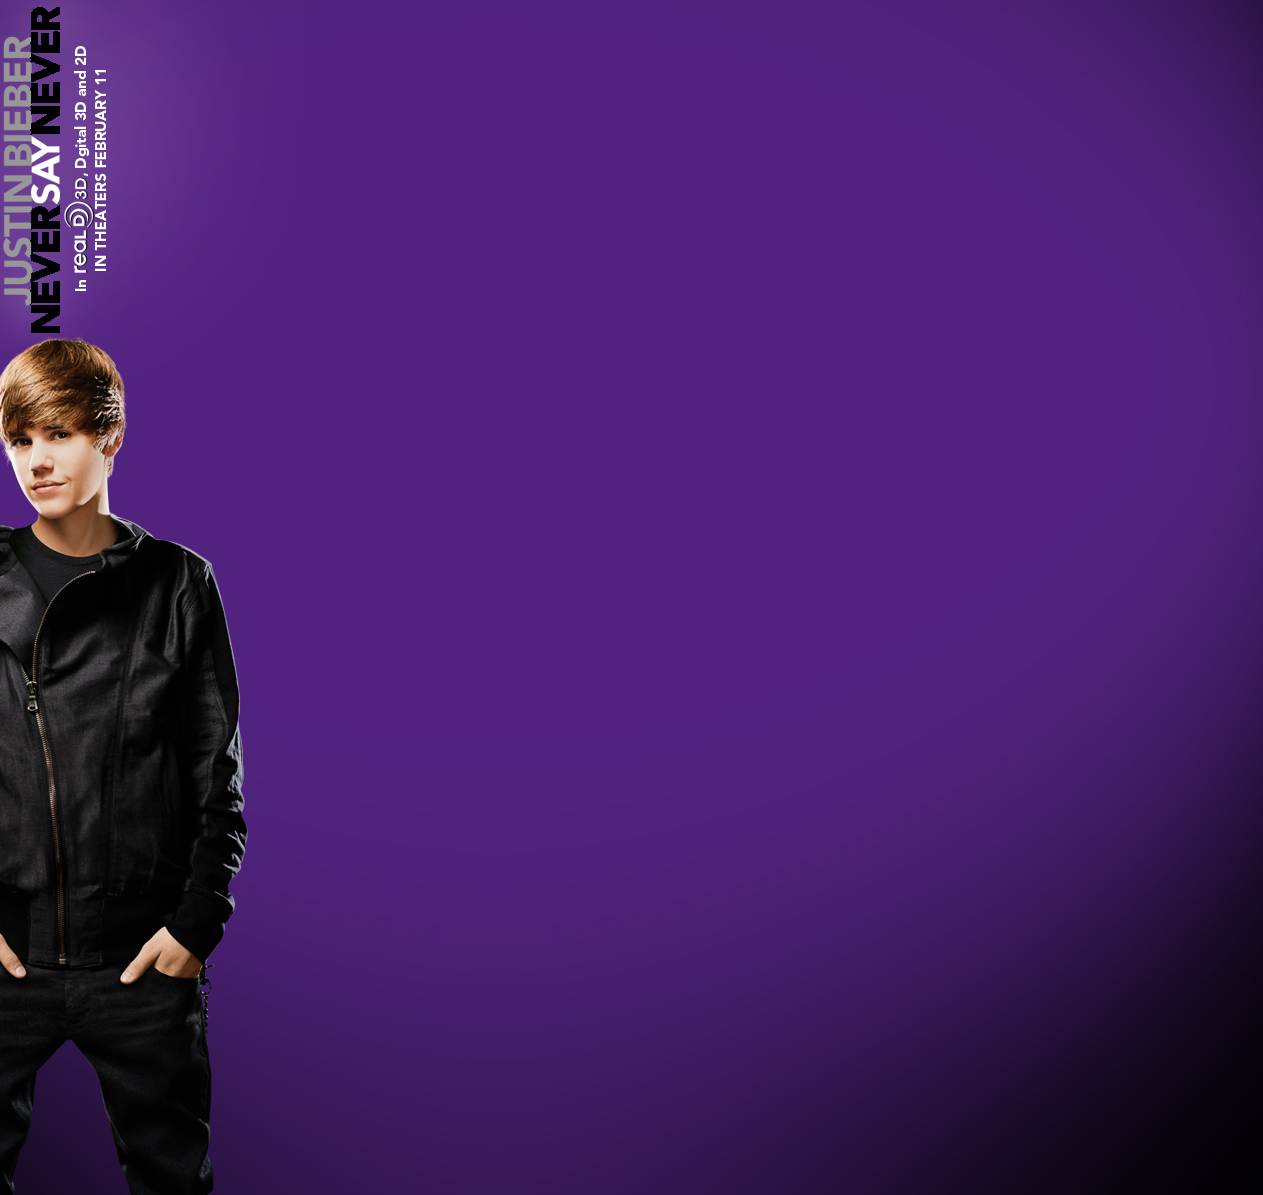 Free Images Online Justin Bieber purple Backgrounds